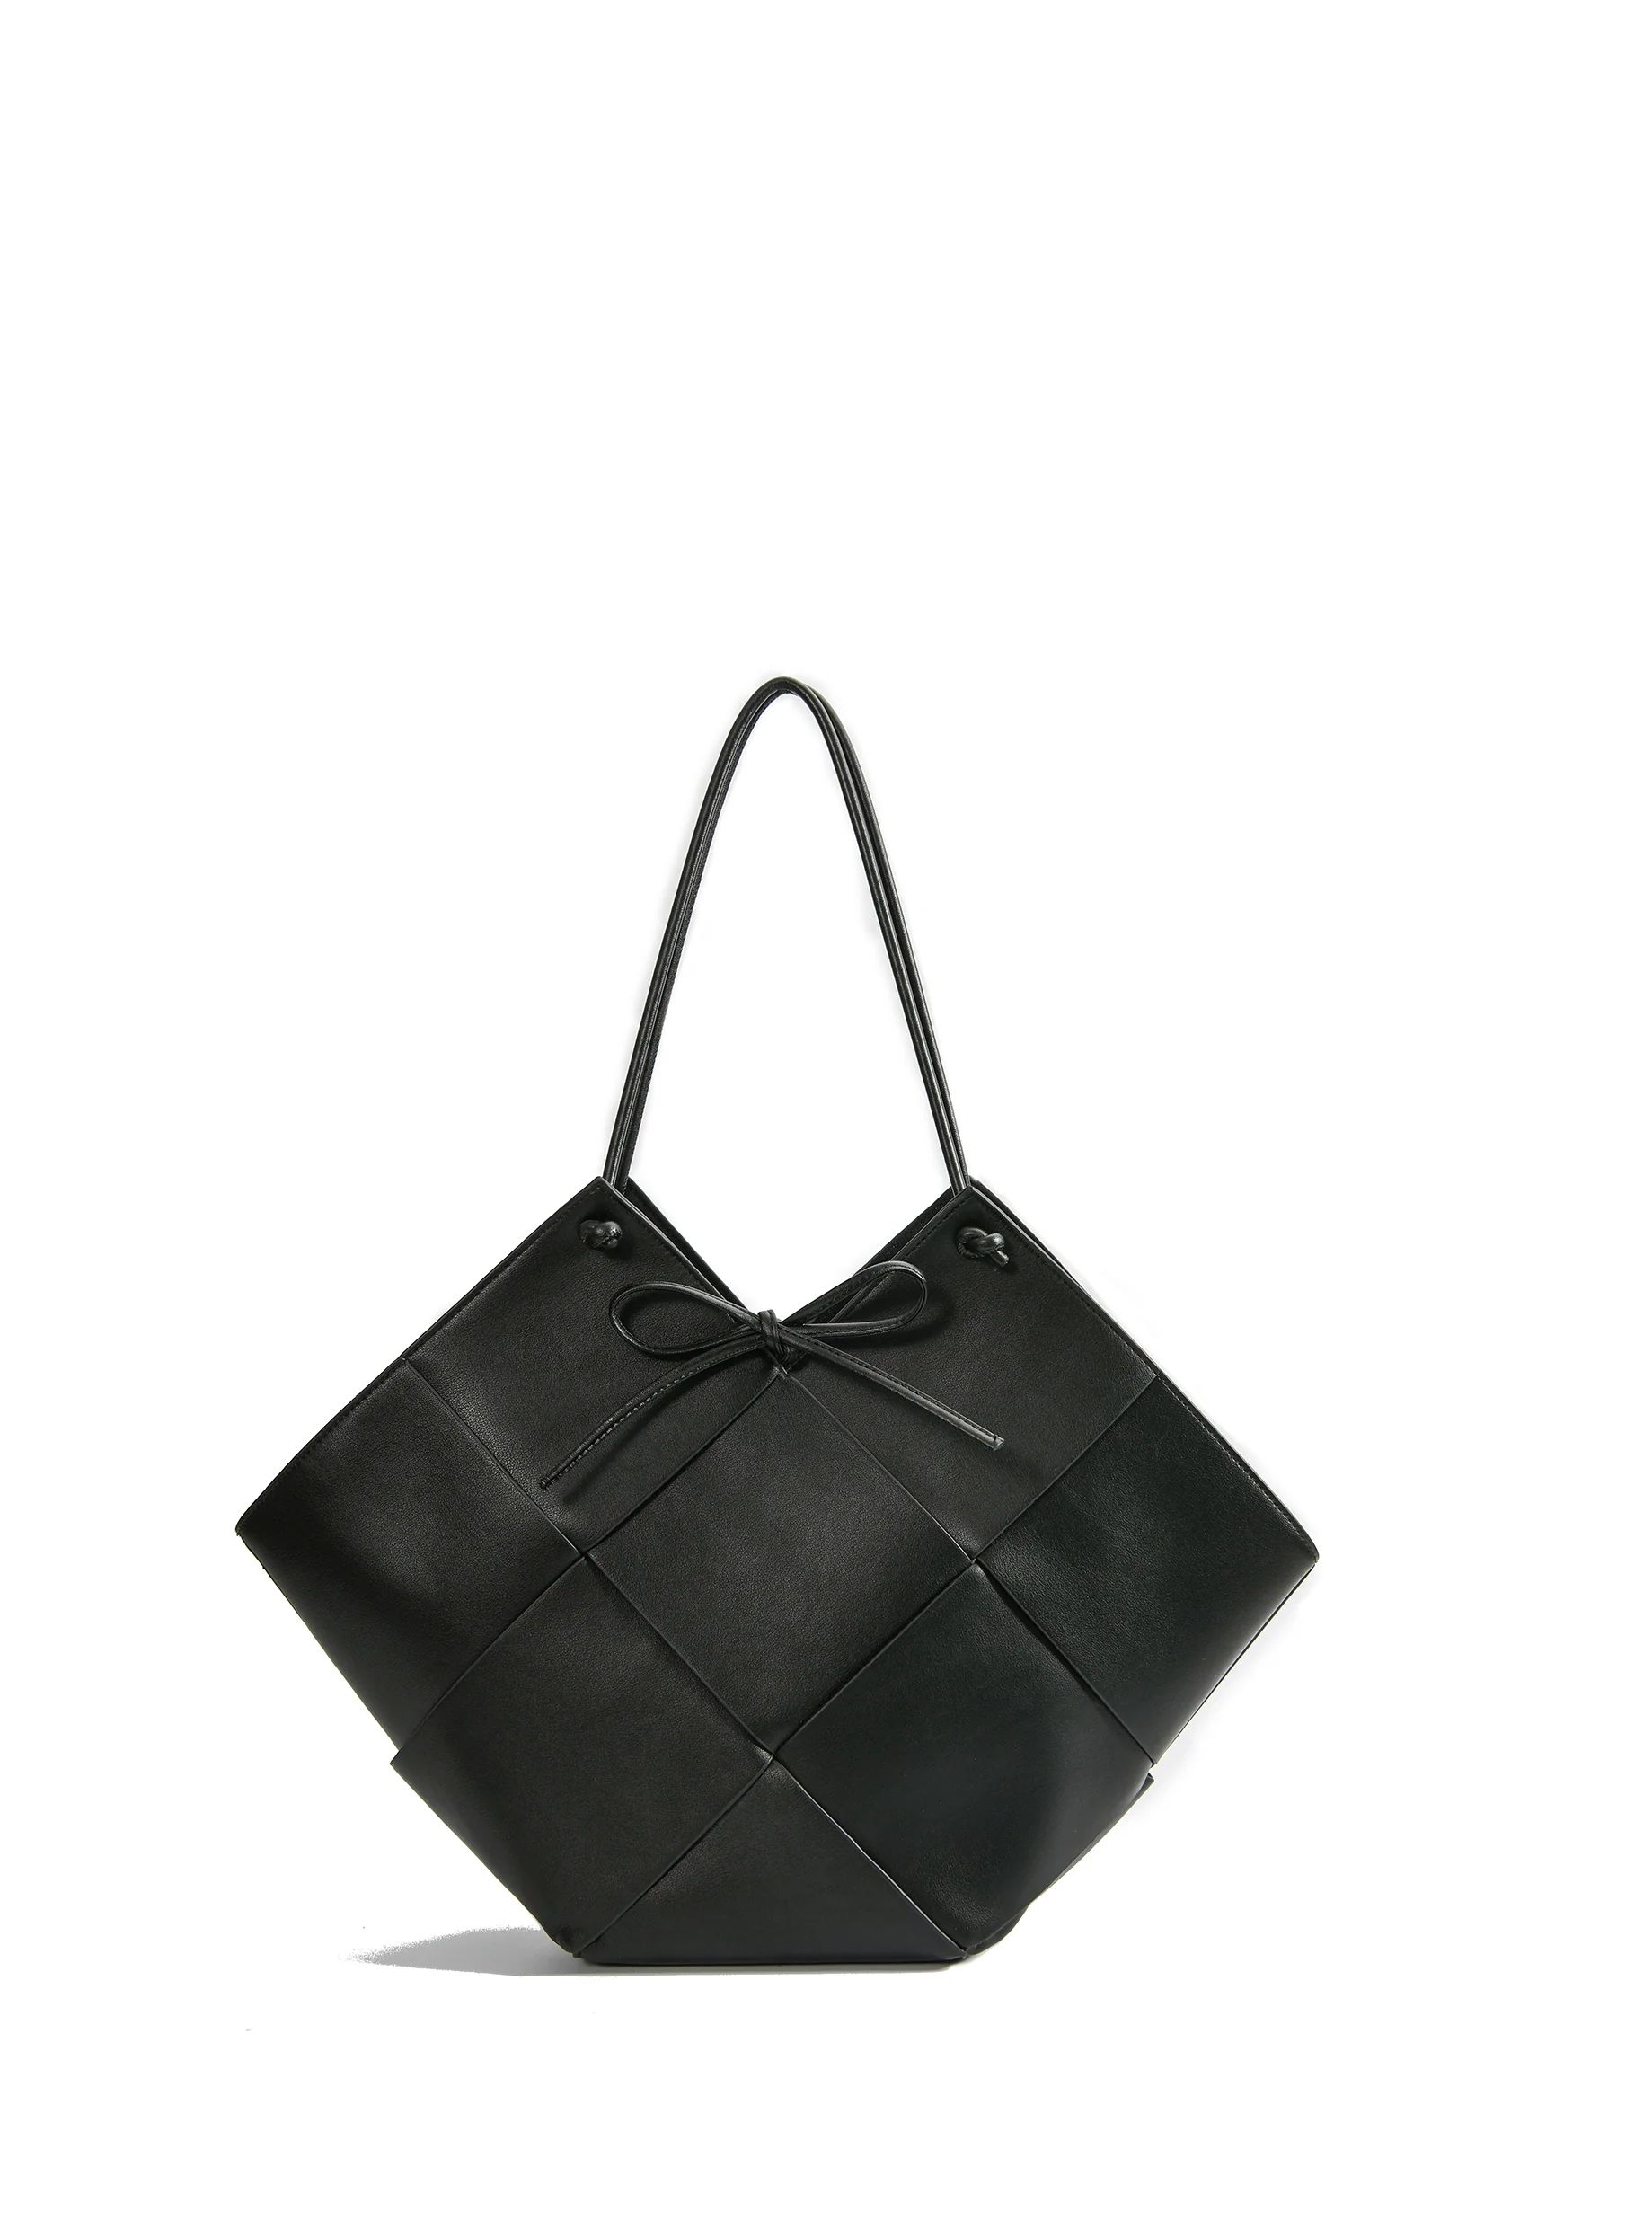 Taylor Contexture Leather Bag, Black | Bob Ore Blue Collection